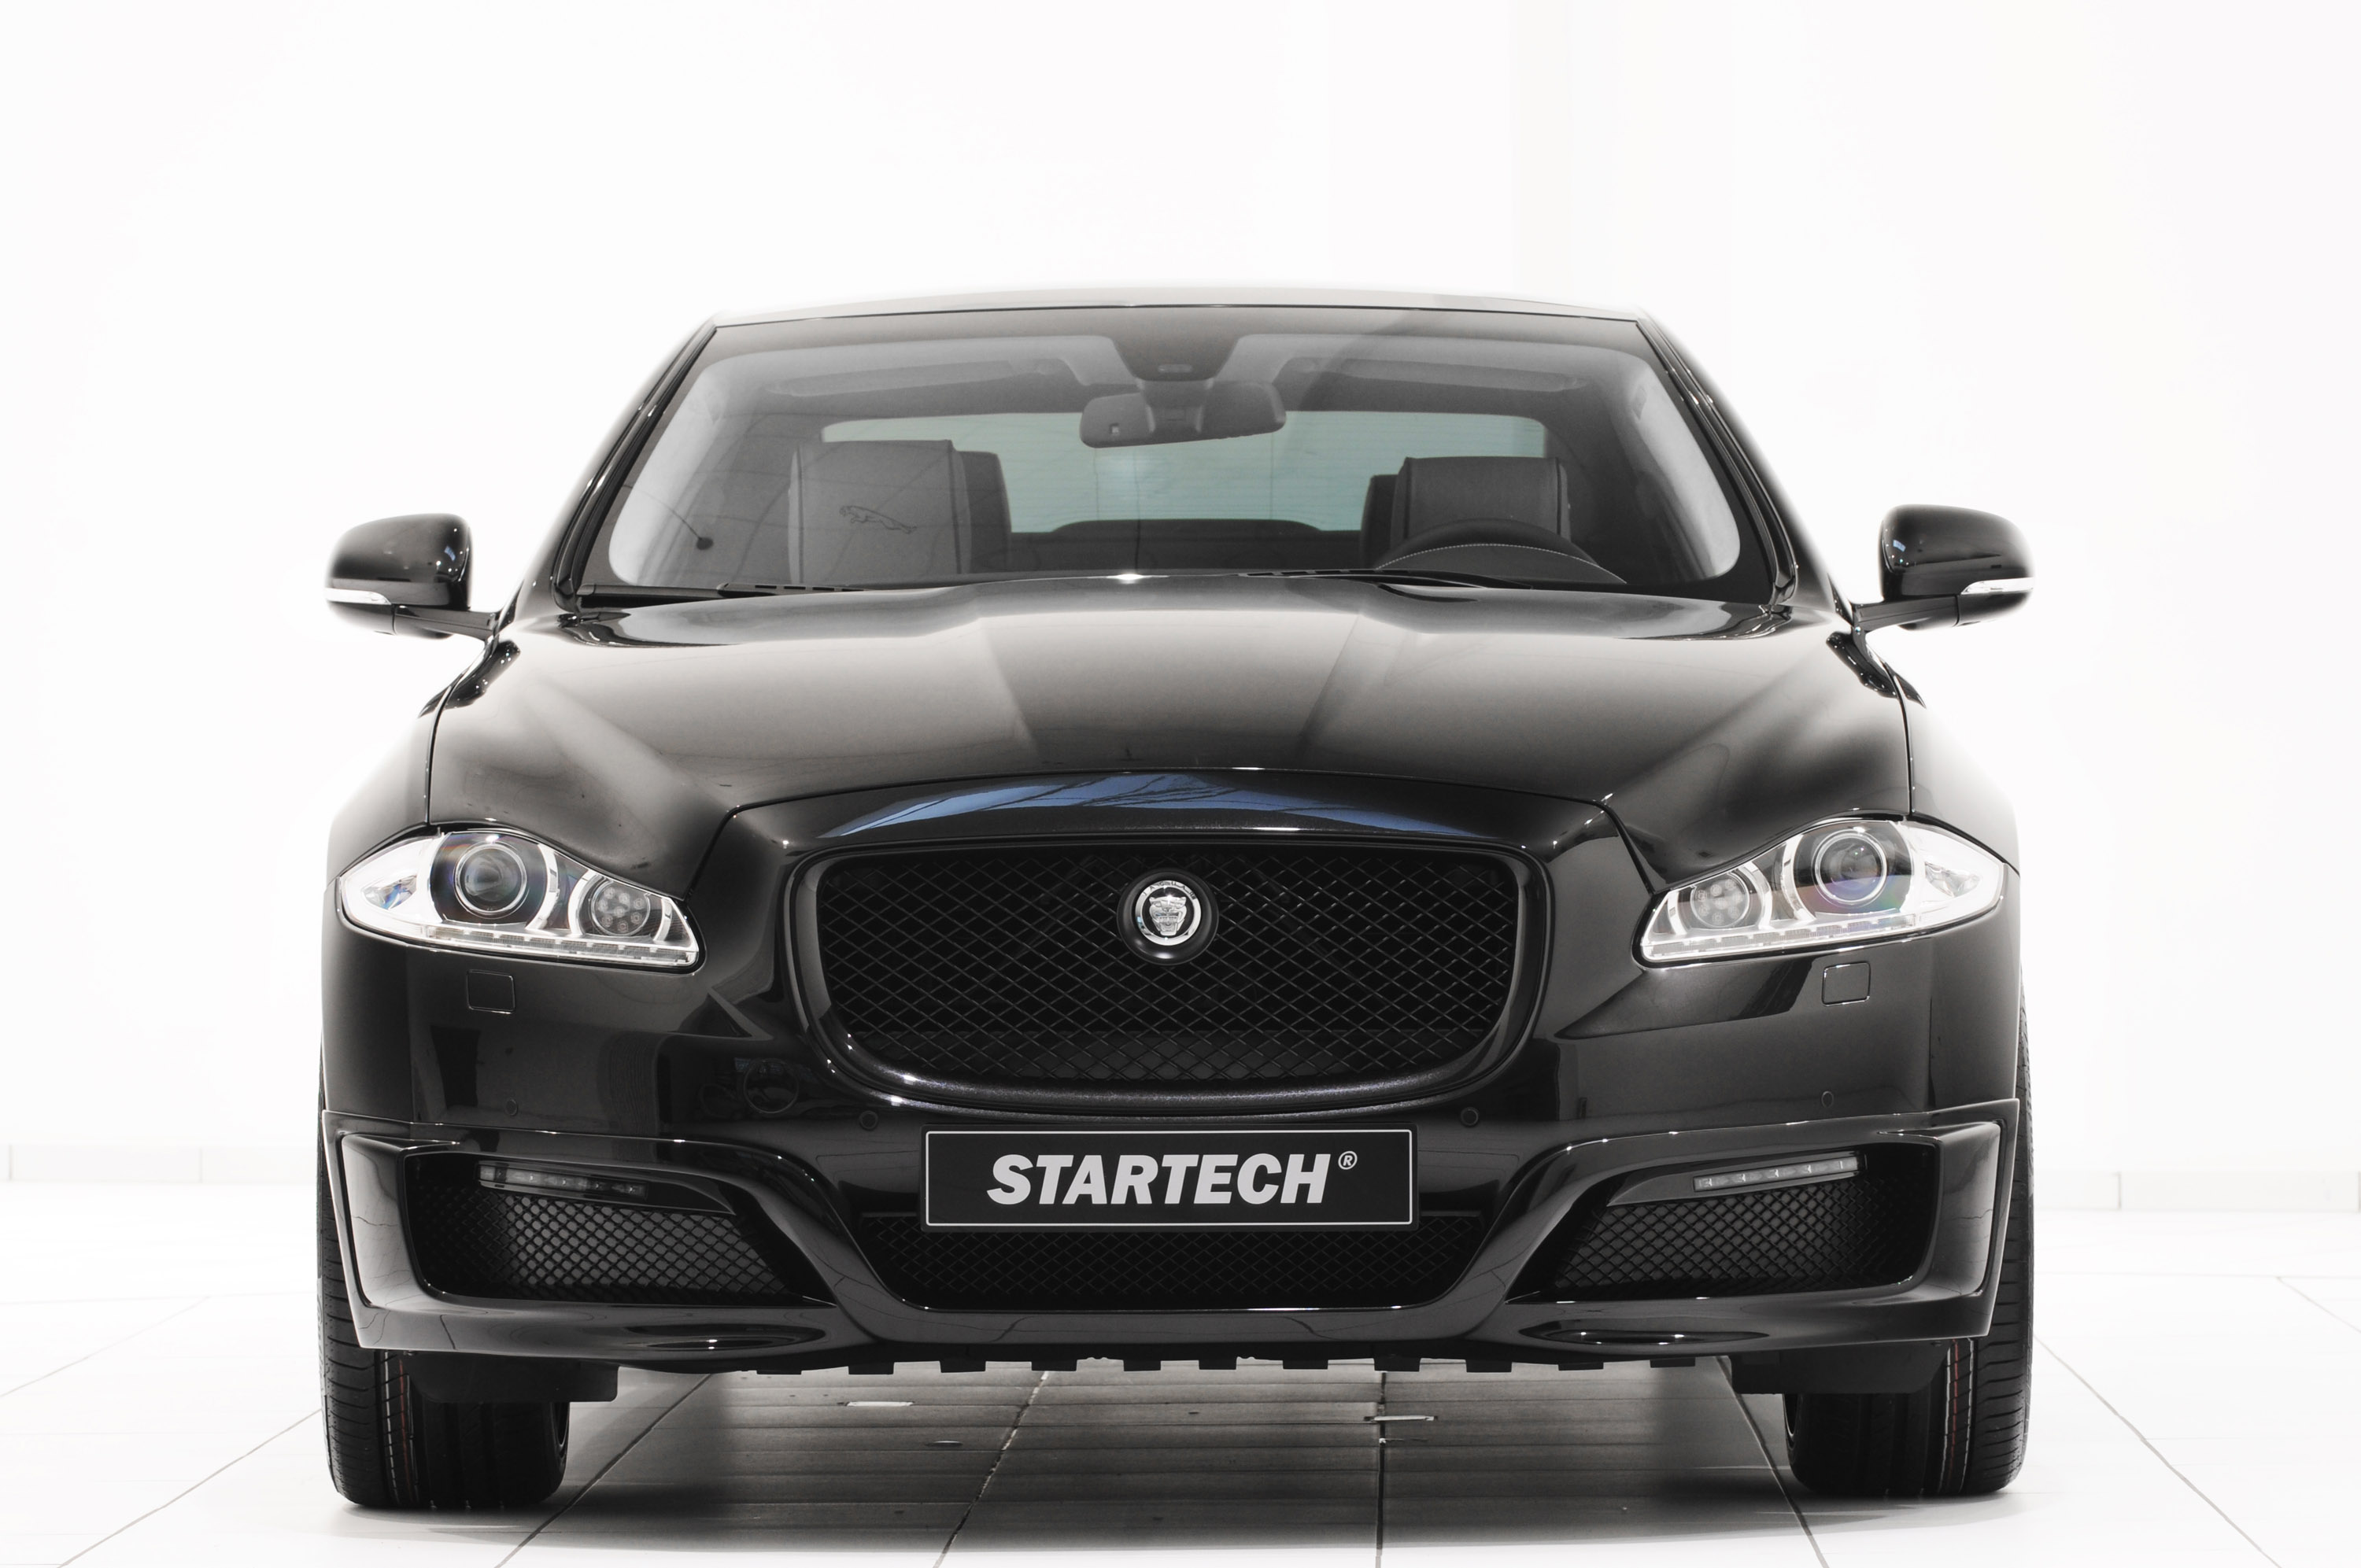 2011 Startech Jaguar XJ Luxury Sedan - HD Pictures @ carsinvasion.com